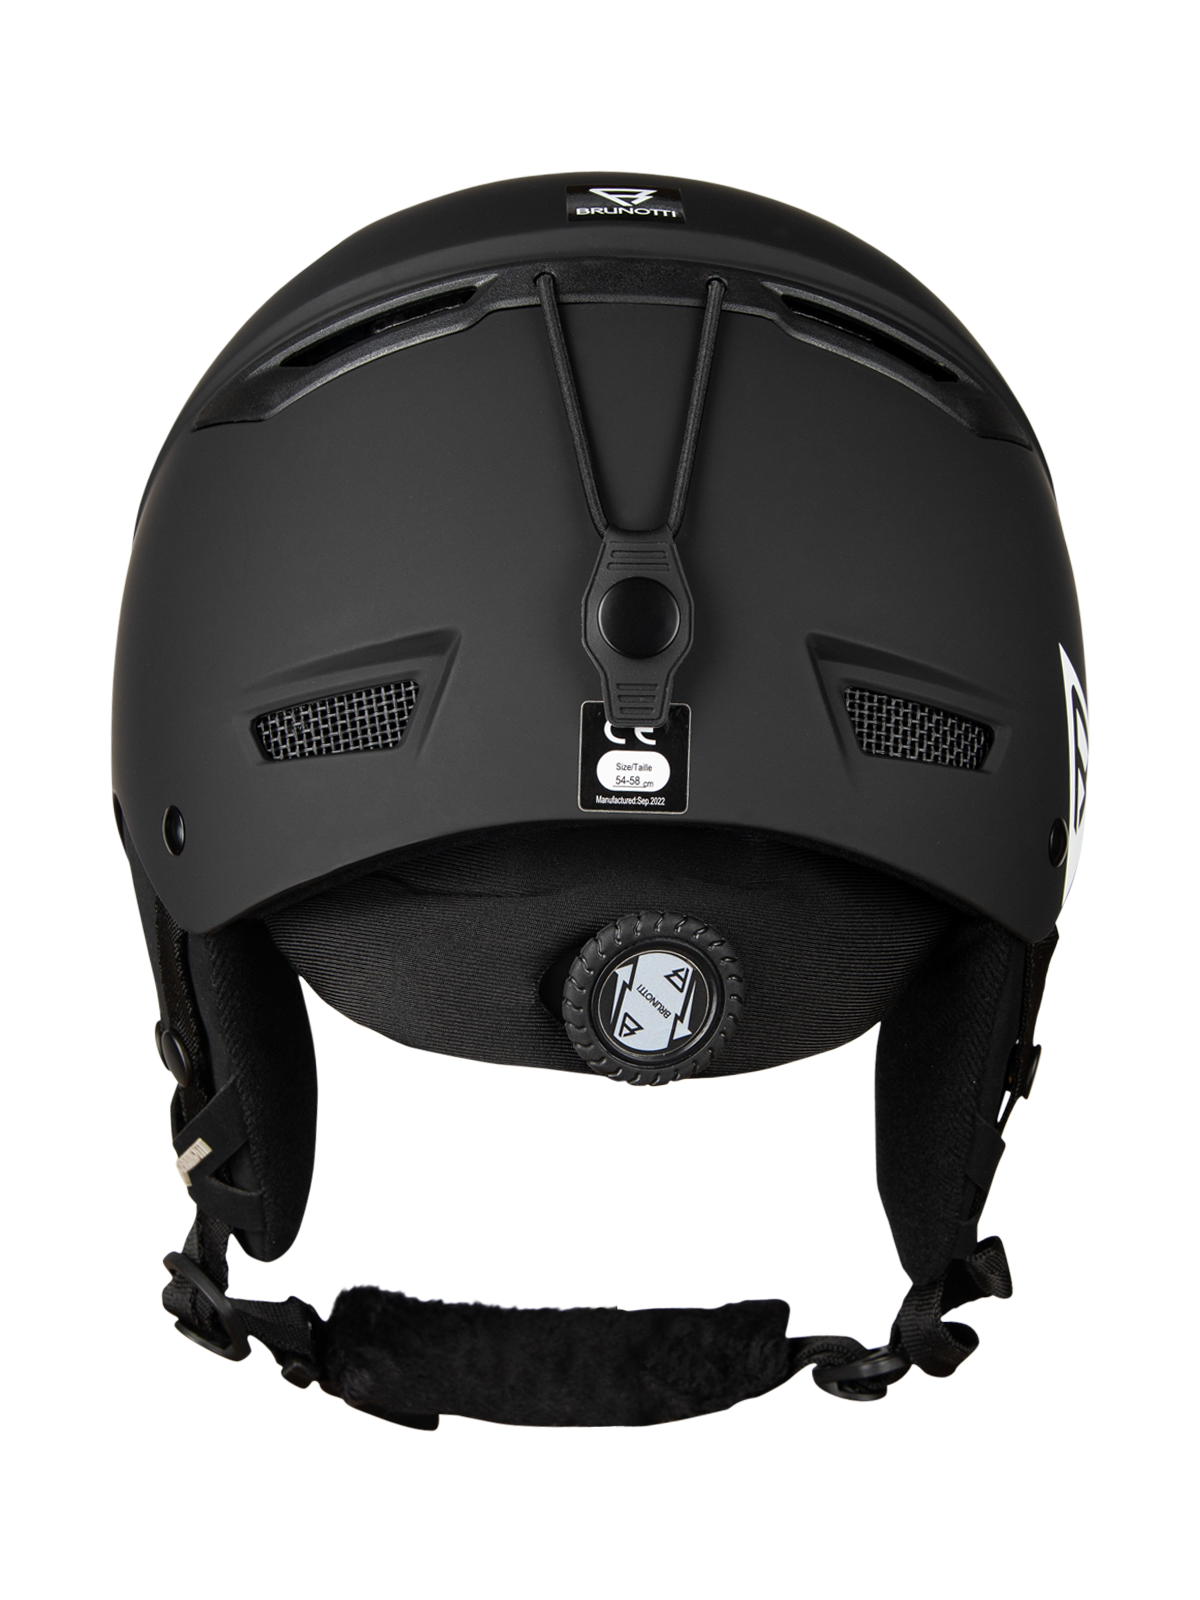 Buffalo Unisex Snow Helmet